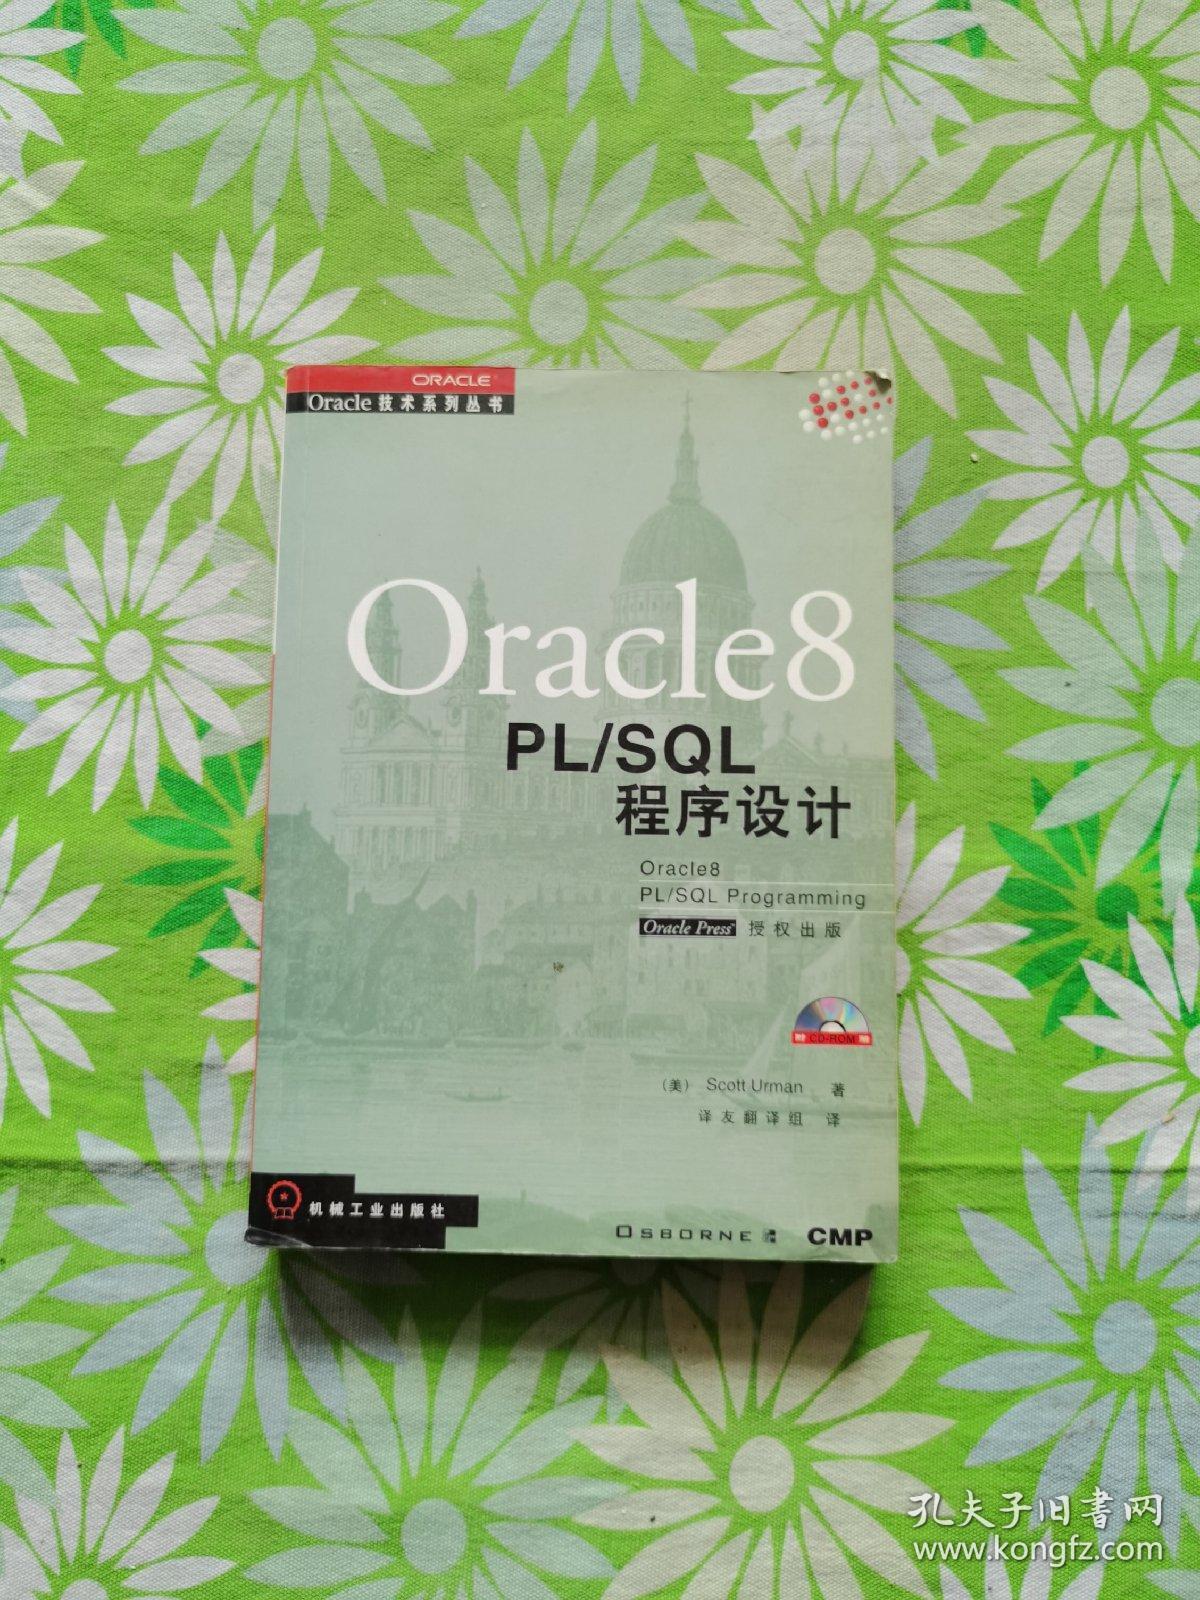 Oracle 8 PL/SQL 程序设计